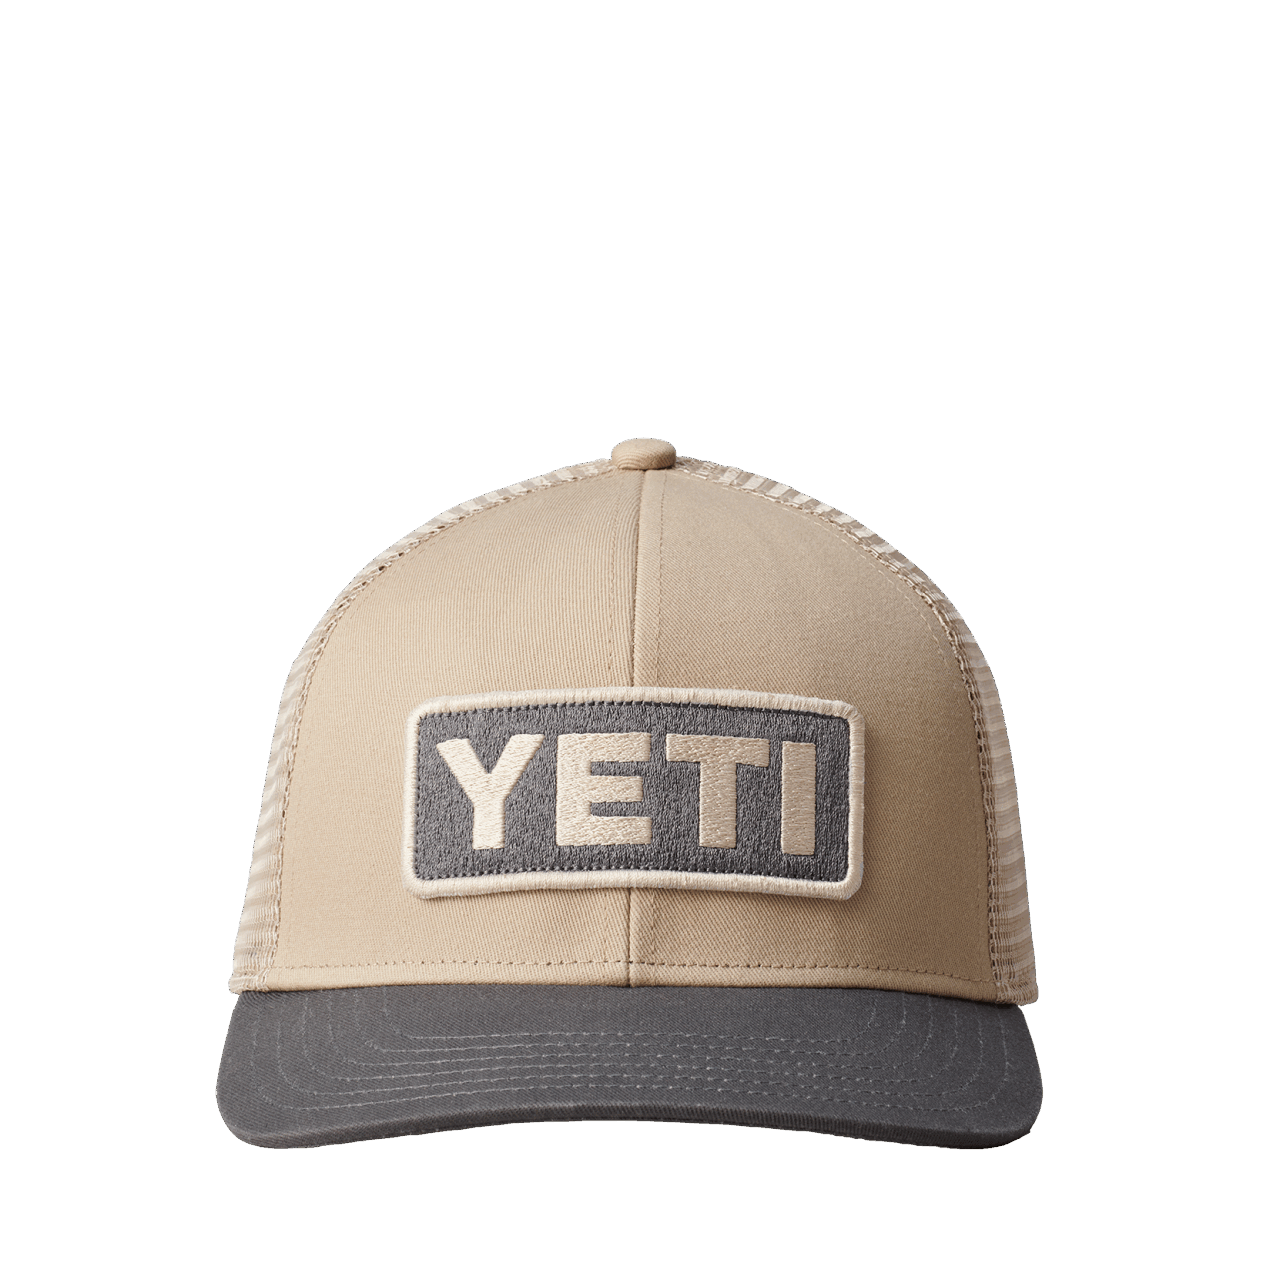 YETI Logo Badge Trucker Hat - grey/taupe